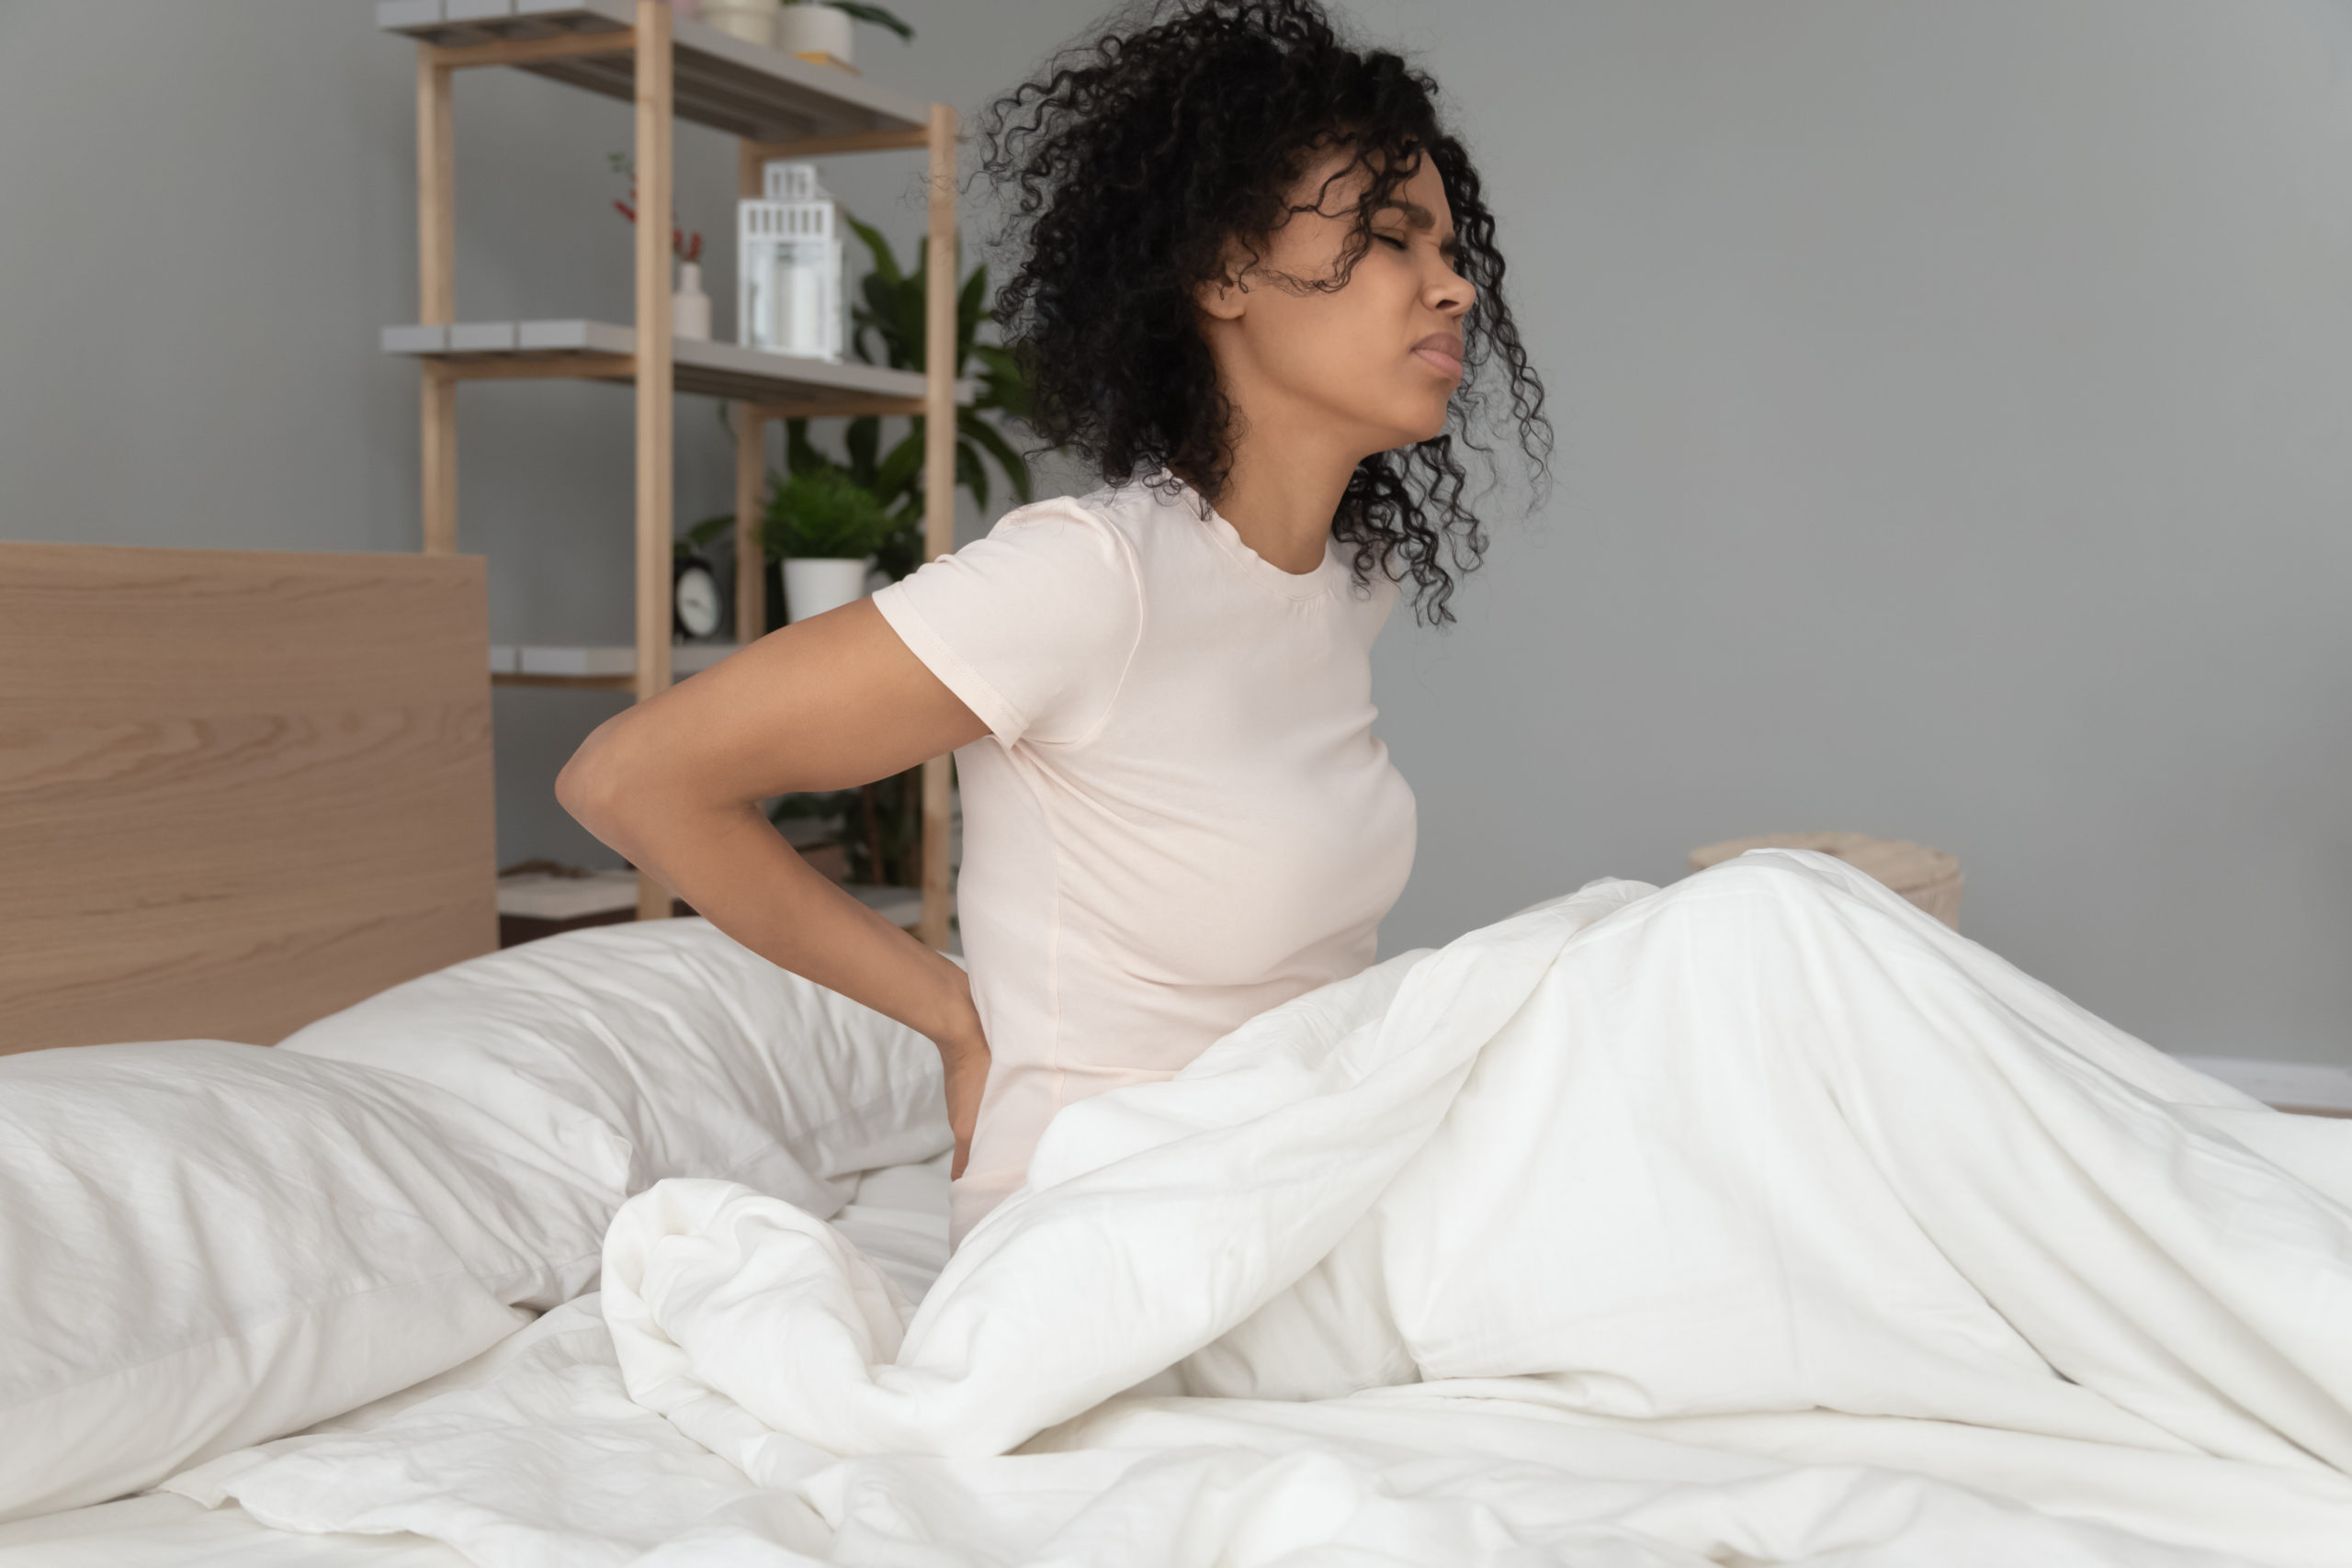 body aches after sleeping on mattress